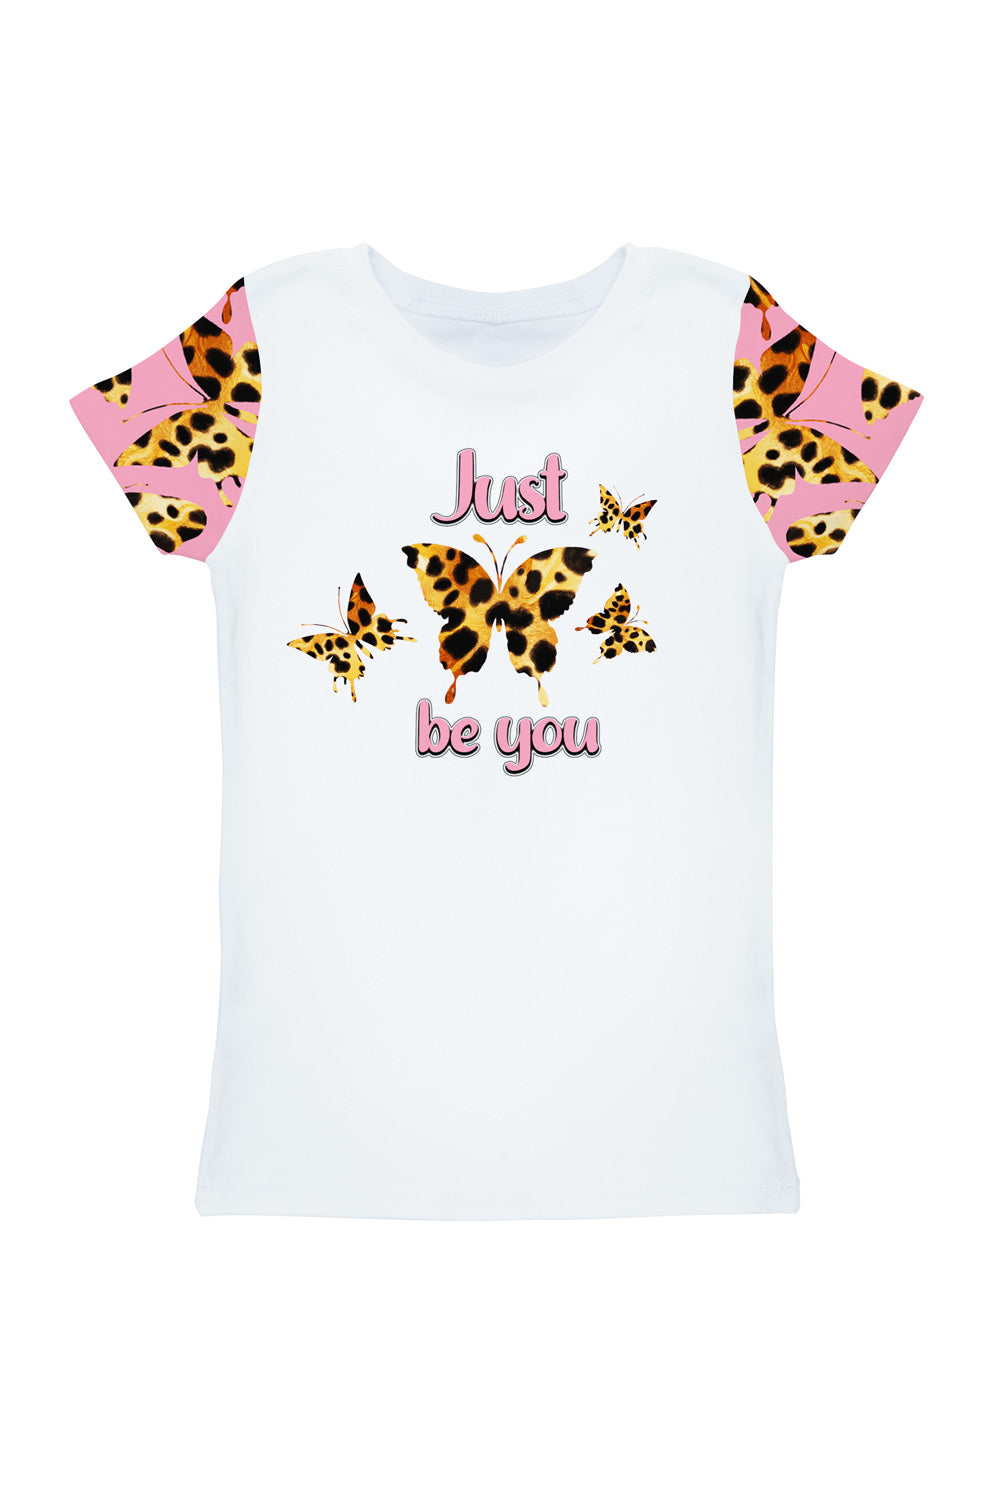 Quaintrelle Zoe White Butterfly Print Casual Designer T-Shirt - Girls - Pineapple Clothing